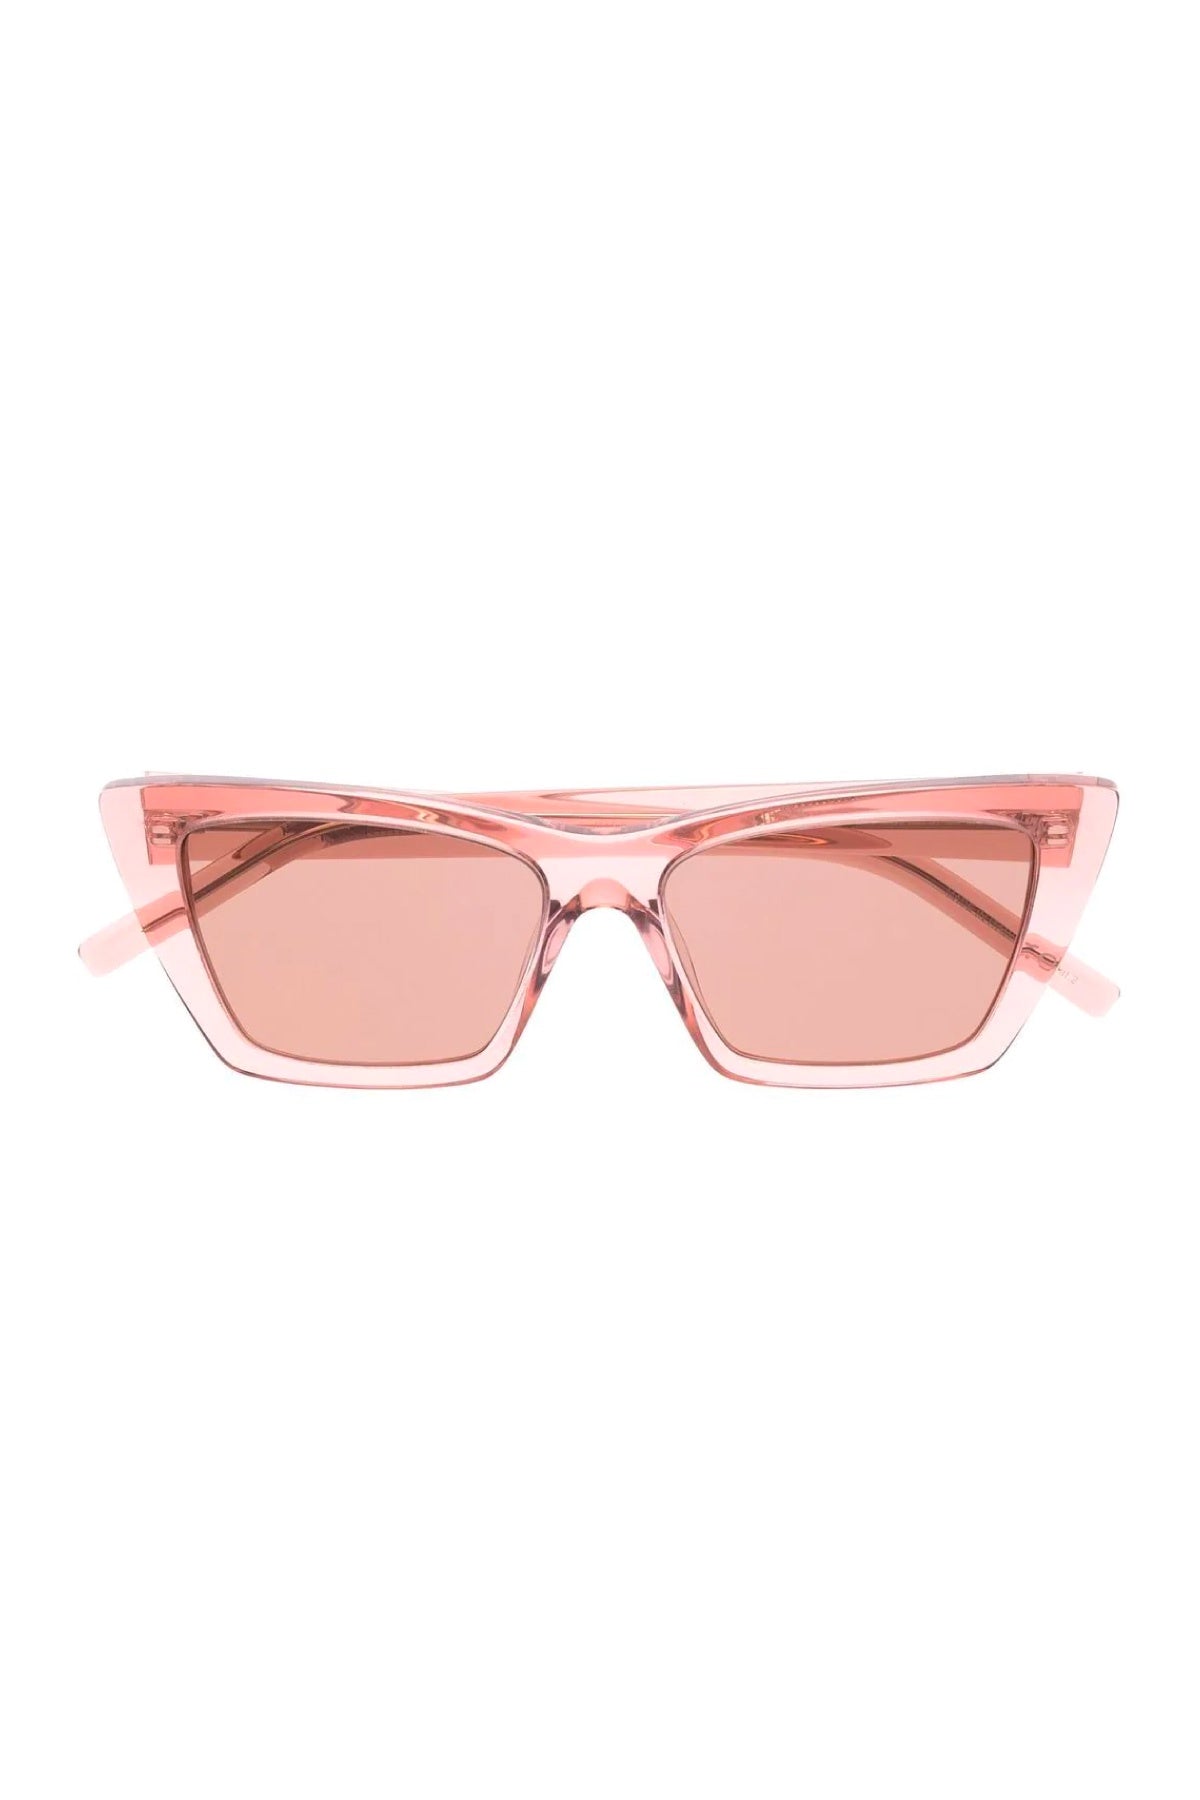 Saint Laurent Mica Sunglasses - Pink